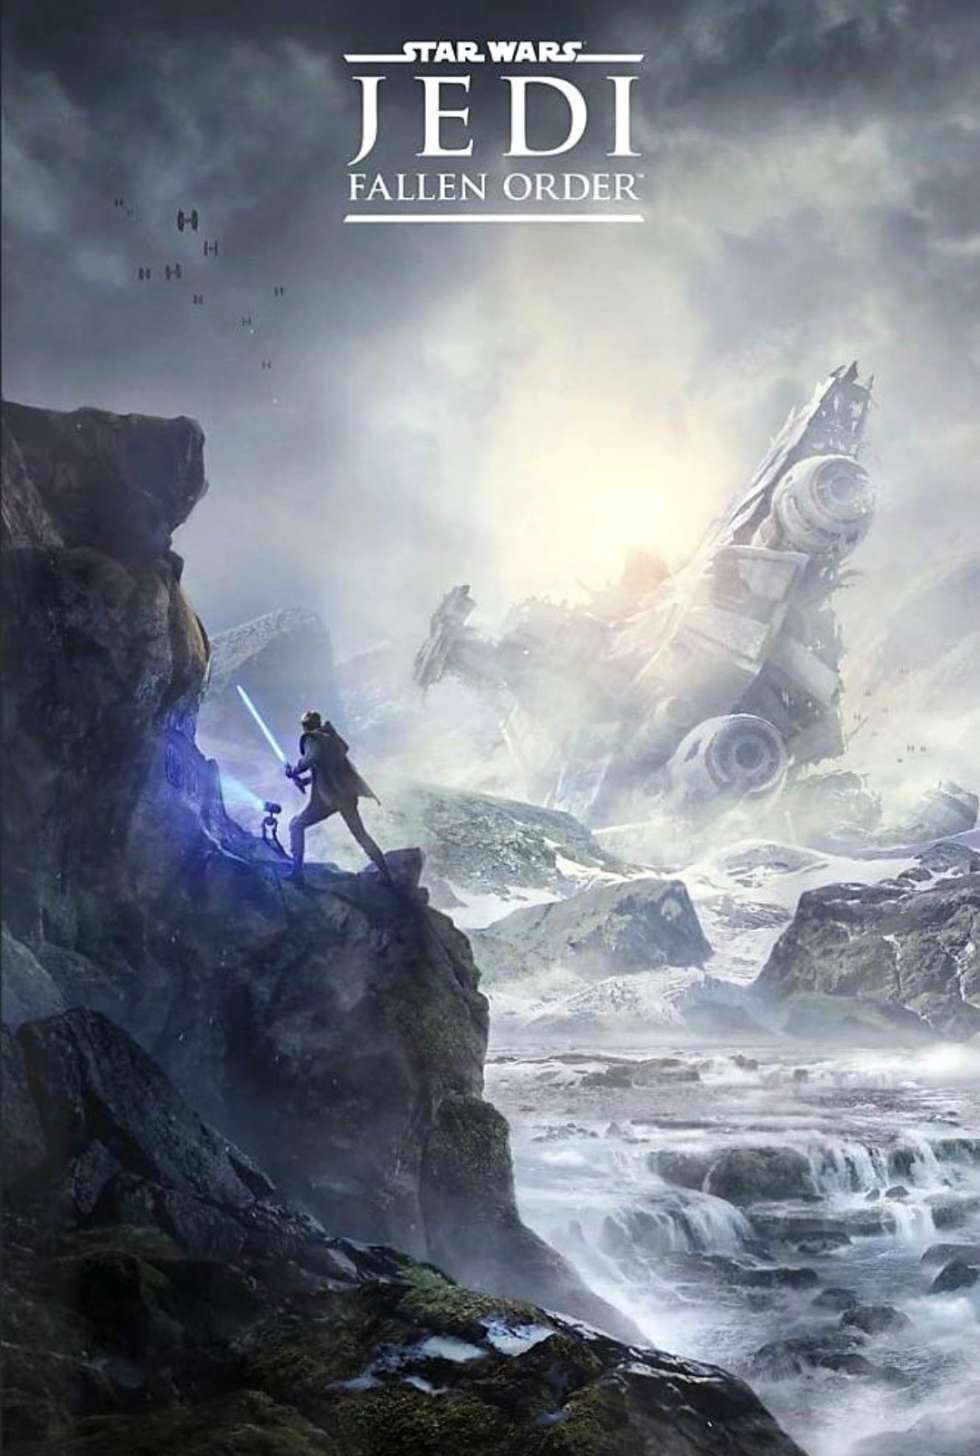 Amazon слил постер Star Wars Jedi: Fallen Order в сеть